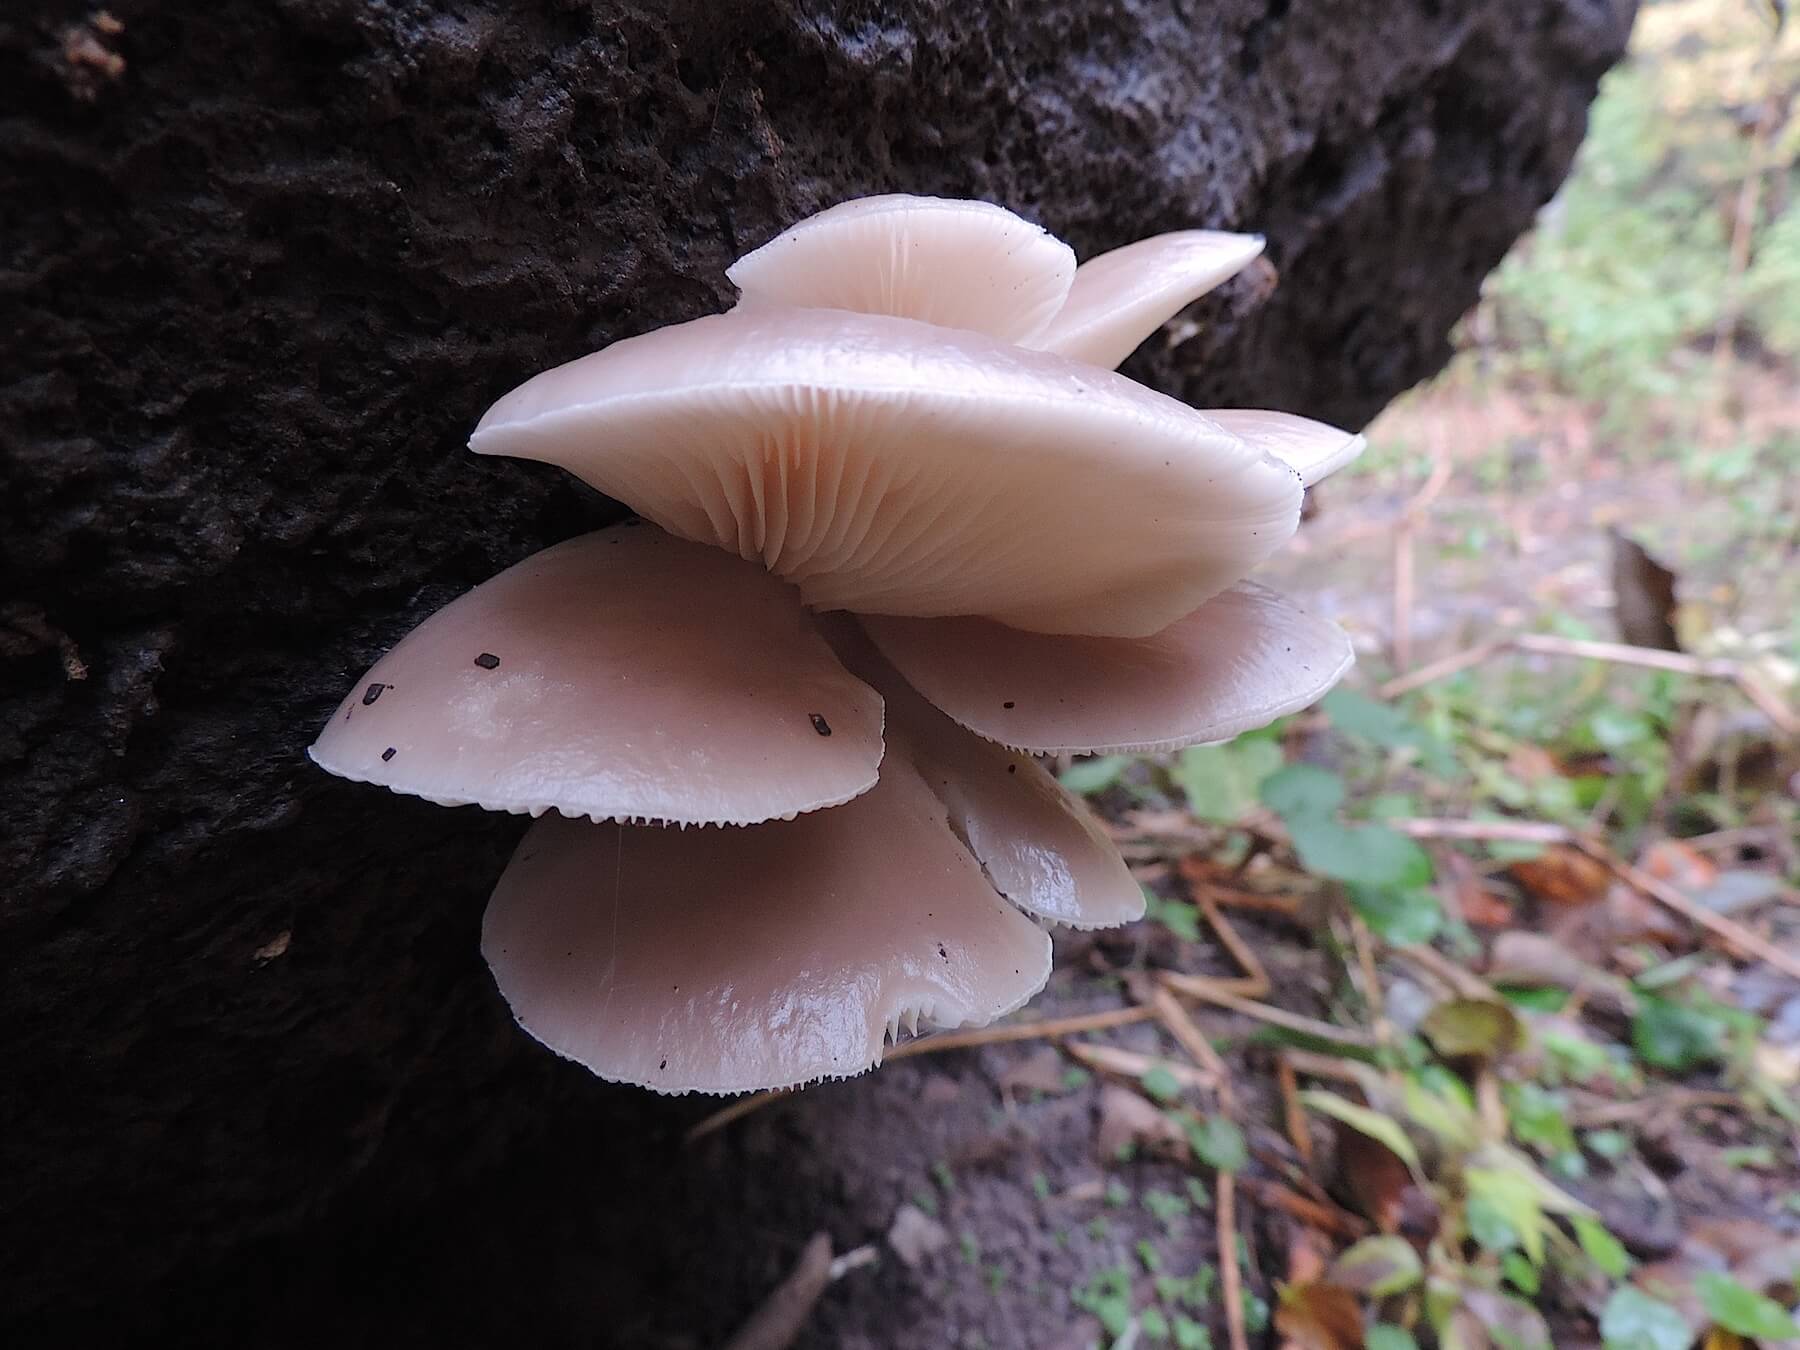 Pair Of Mushrooms Look Like Boobs